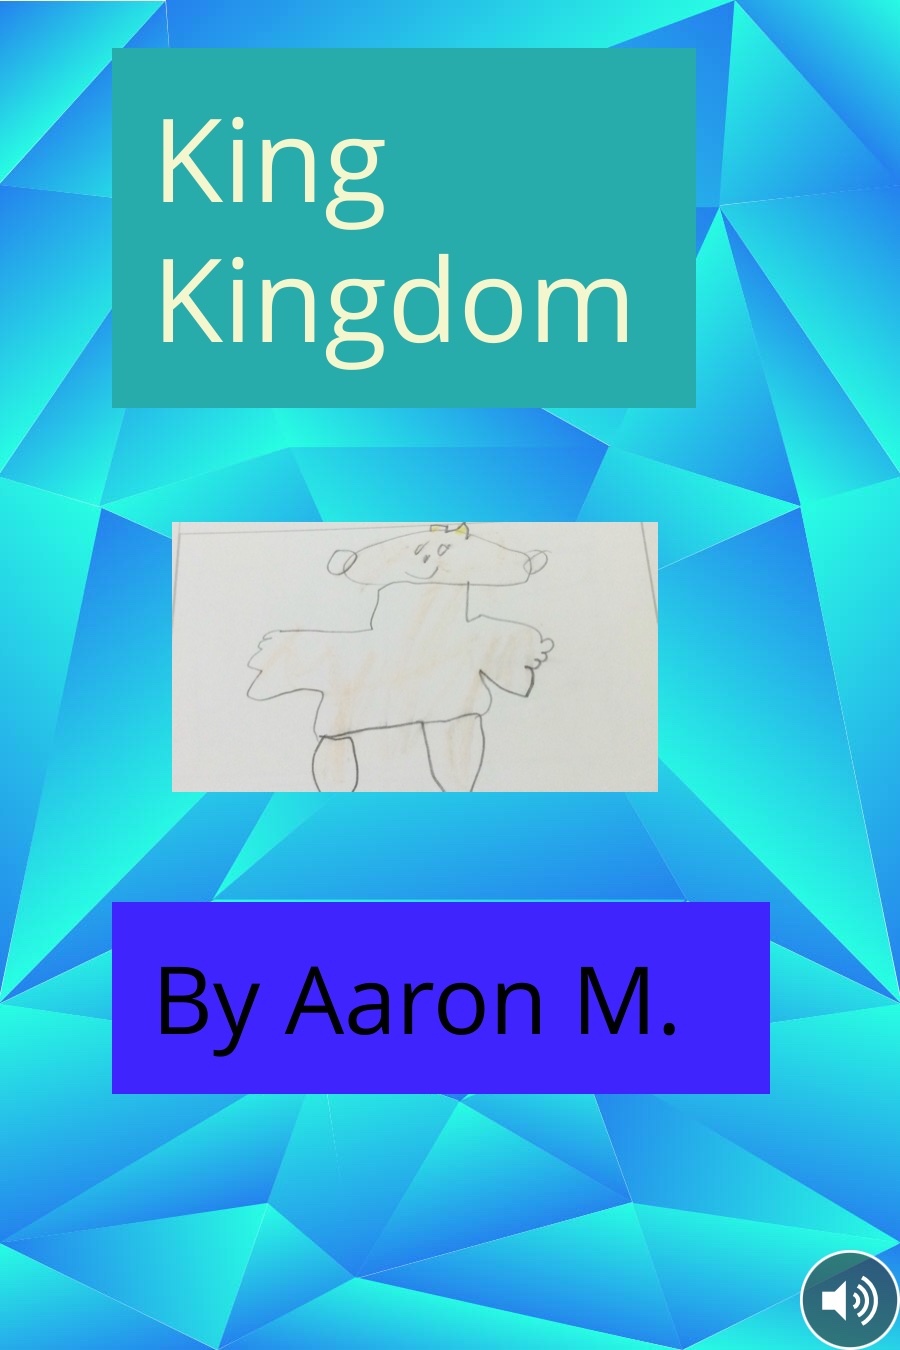 King Kingdom by Aaron M